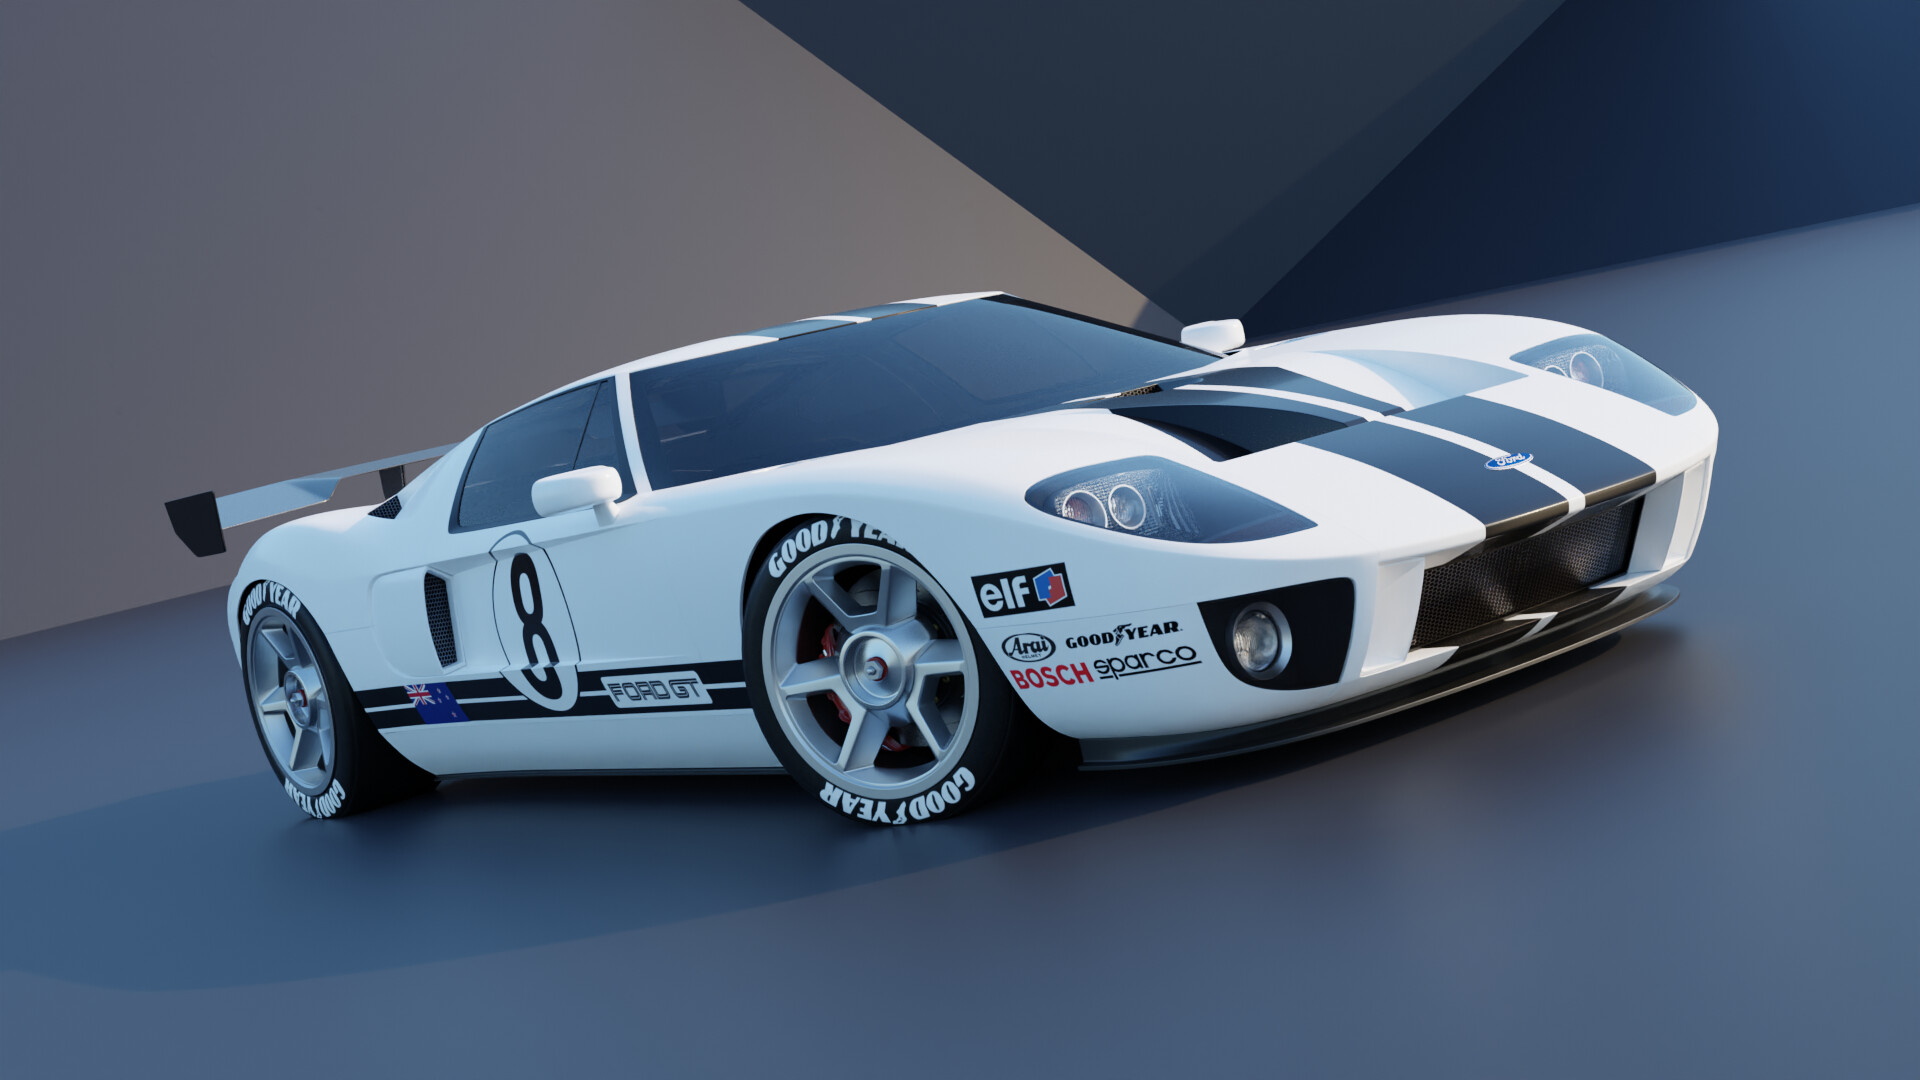 Gran Turismo 7] Ford GT LM race car spec II race tune 